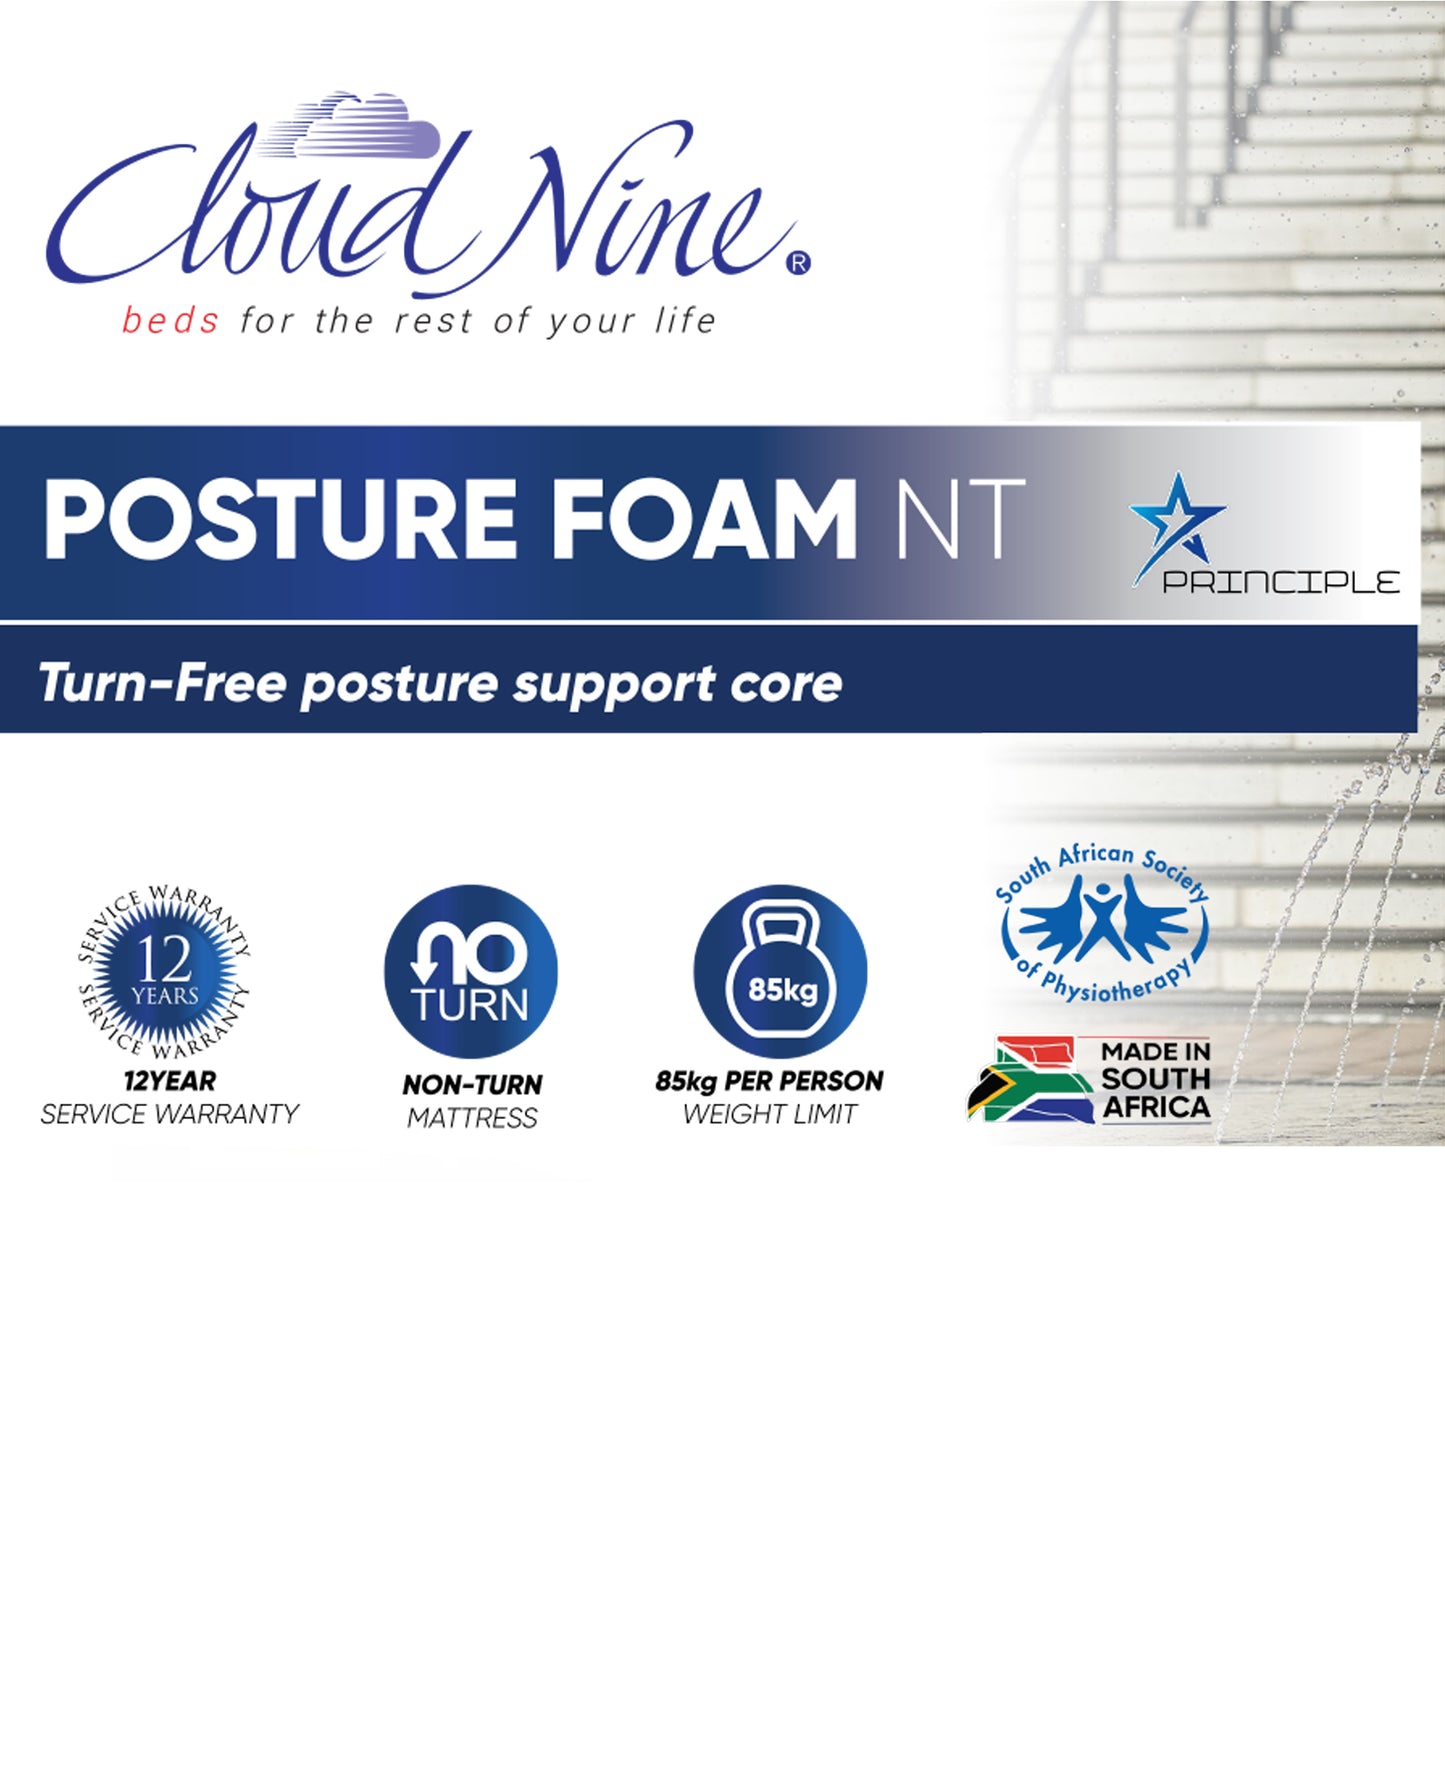 Cloud Nine Posture Foam NT Bed